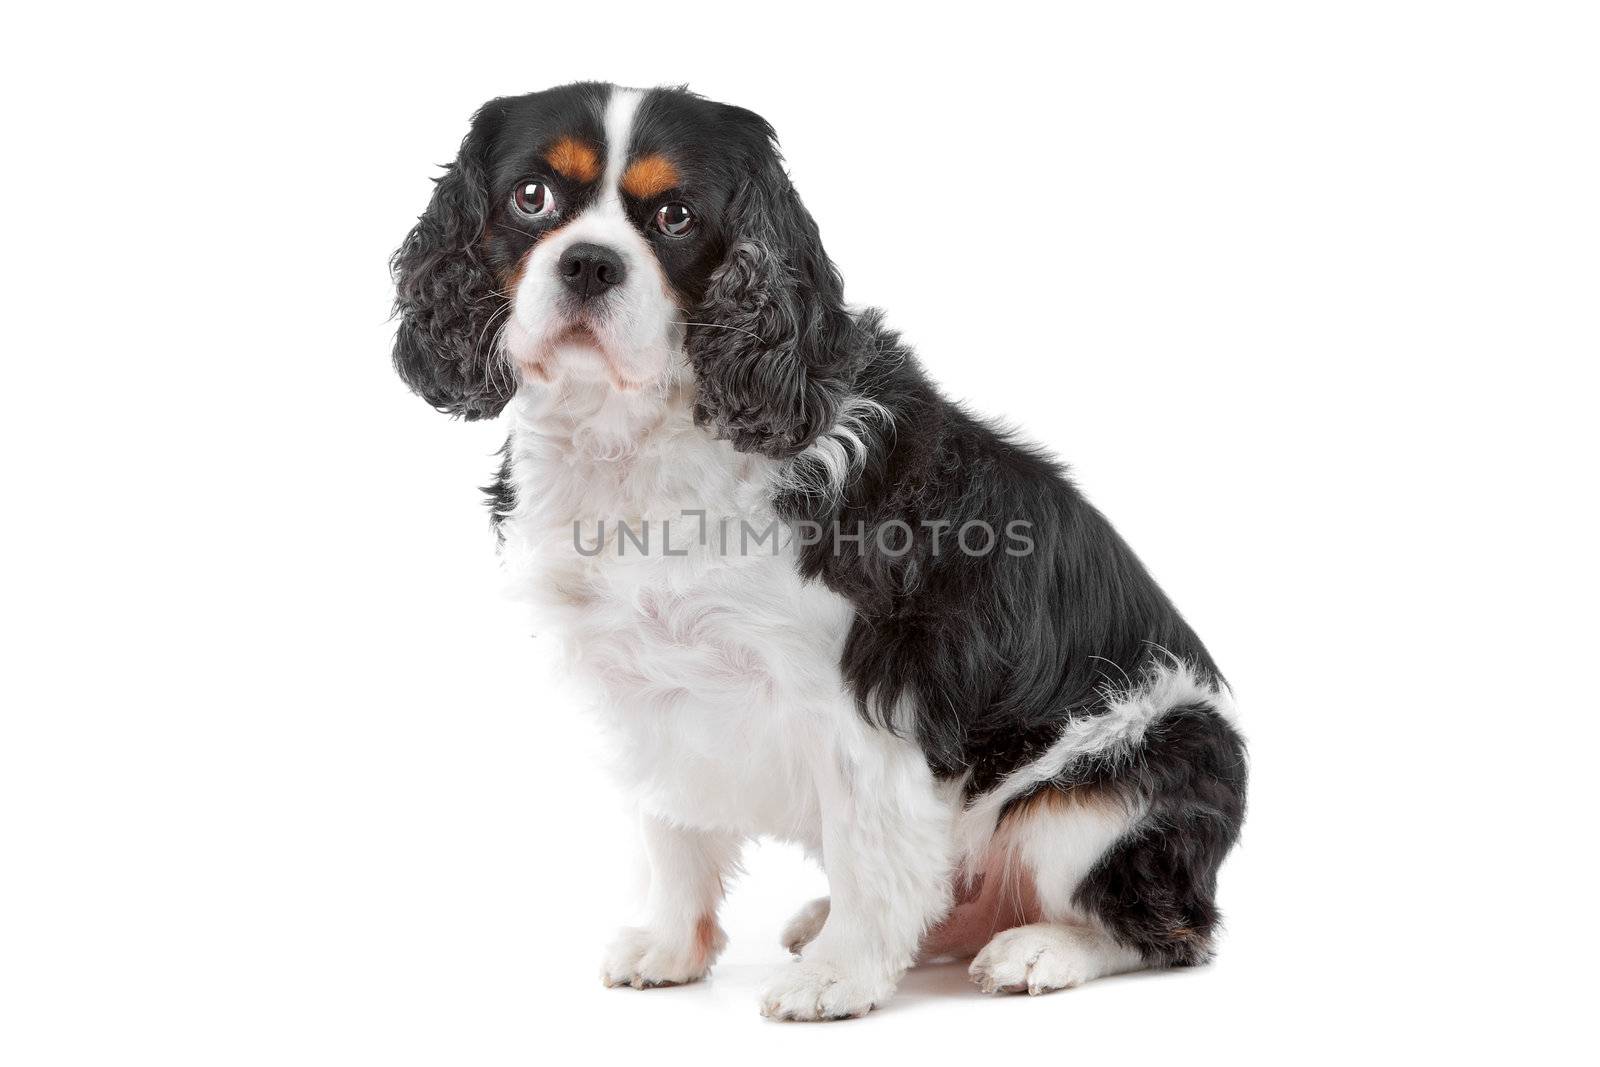 Cute Cavalier King Charles Spaniel dog by eriklam